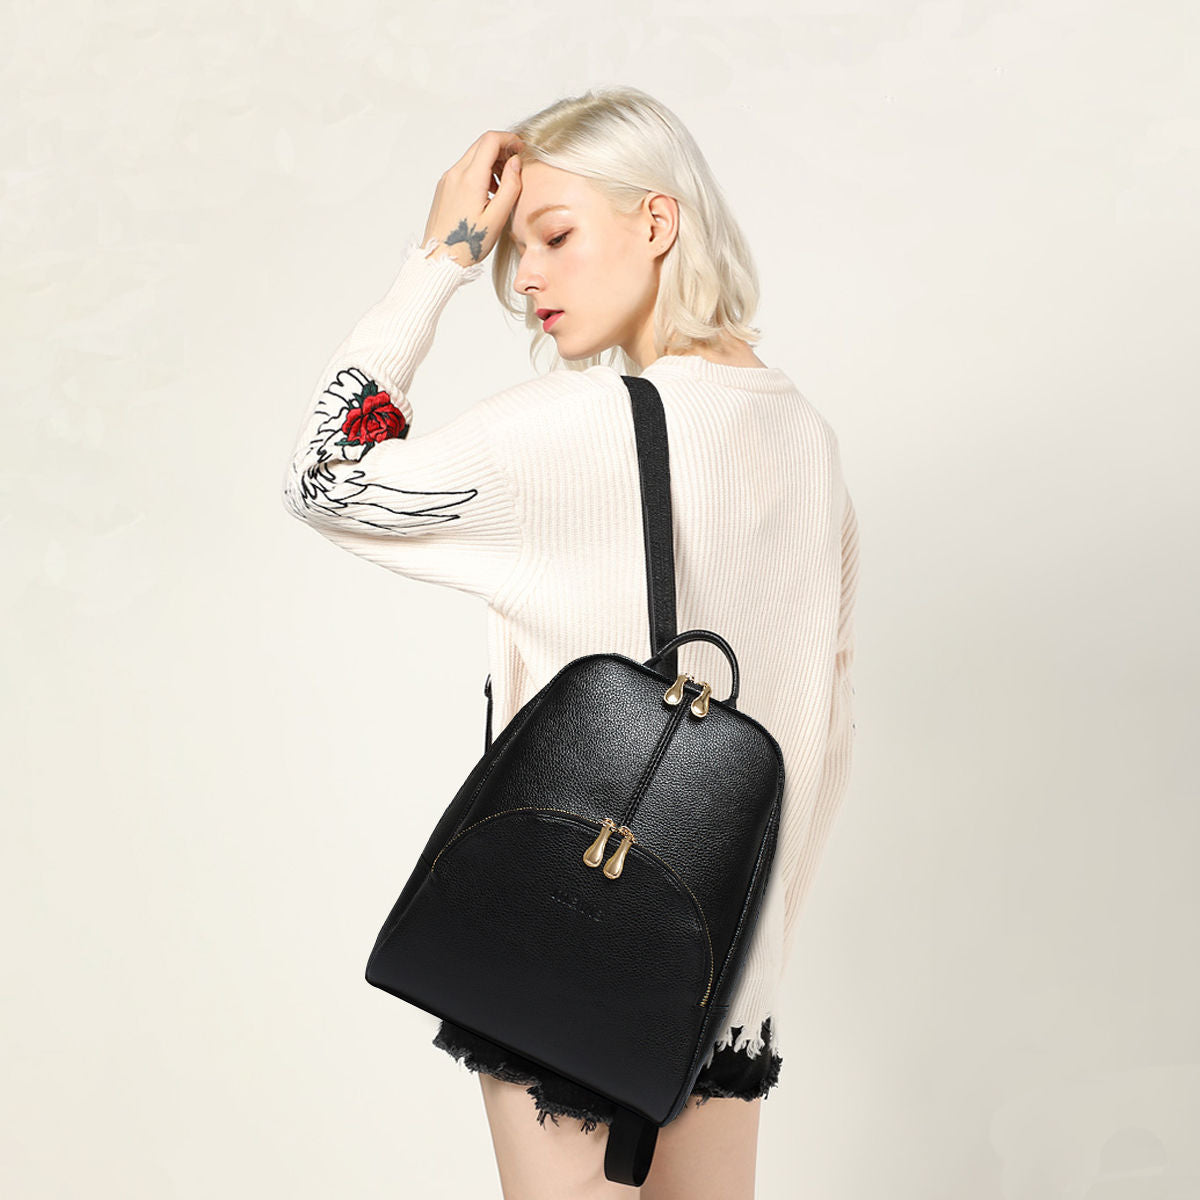 NICOLE & DORIS Women's Fashion Backpacks Leopard Rucksack Bag PU